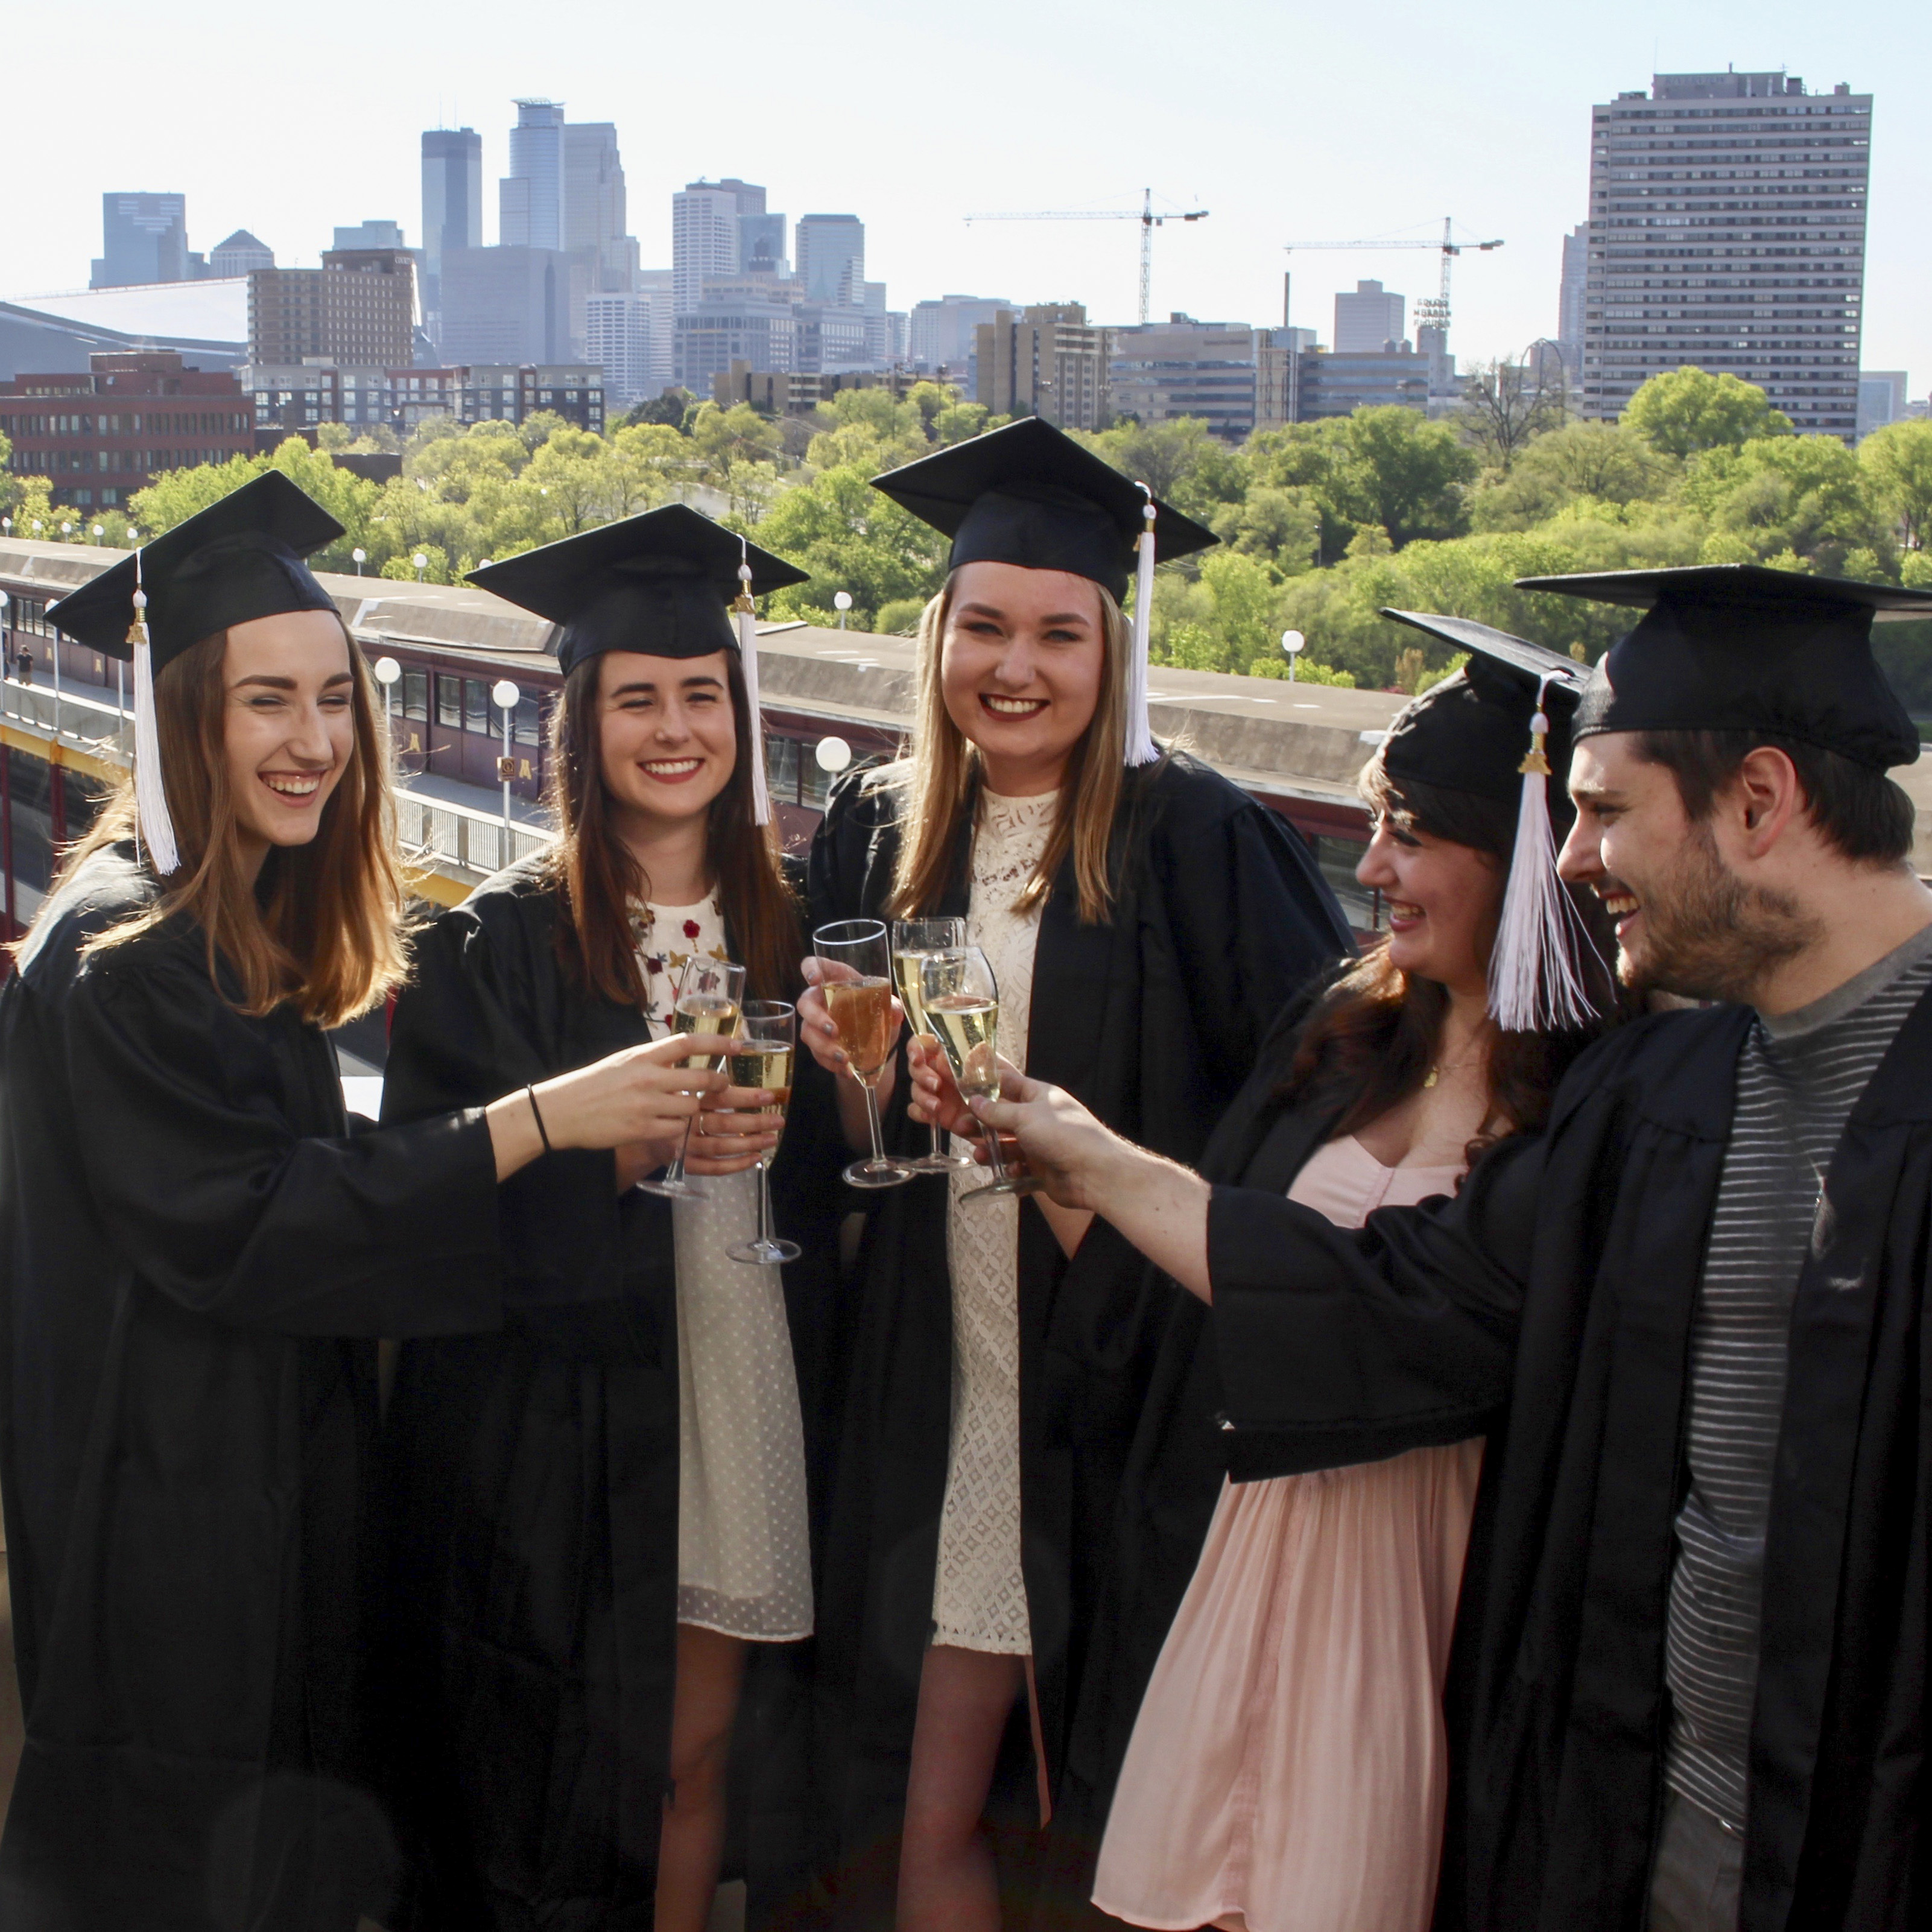 5 people in graduation uniforms toasting